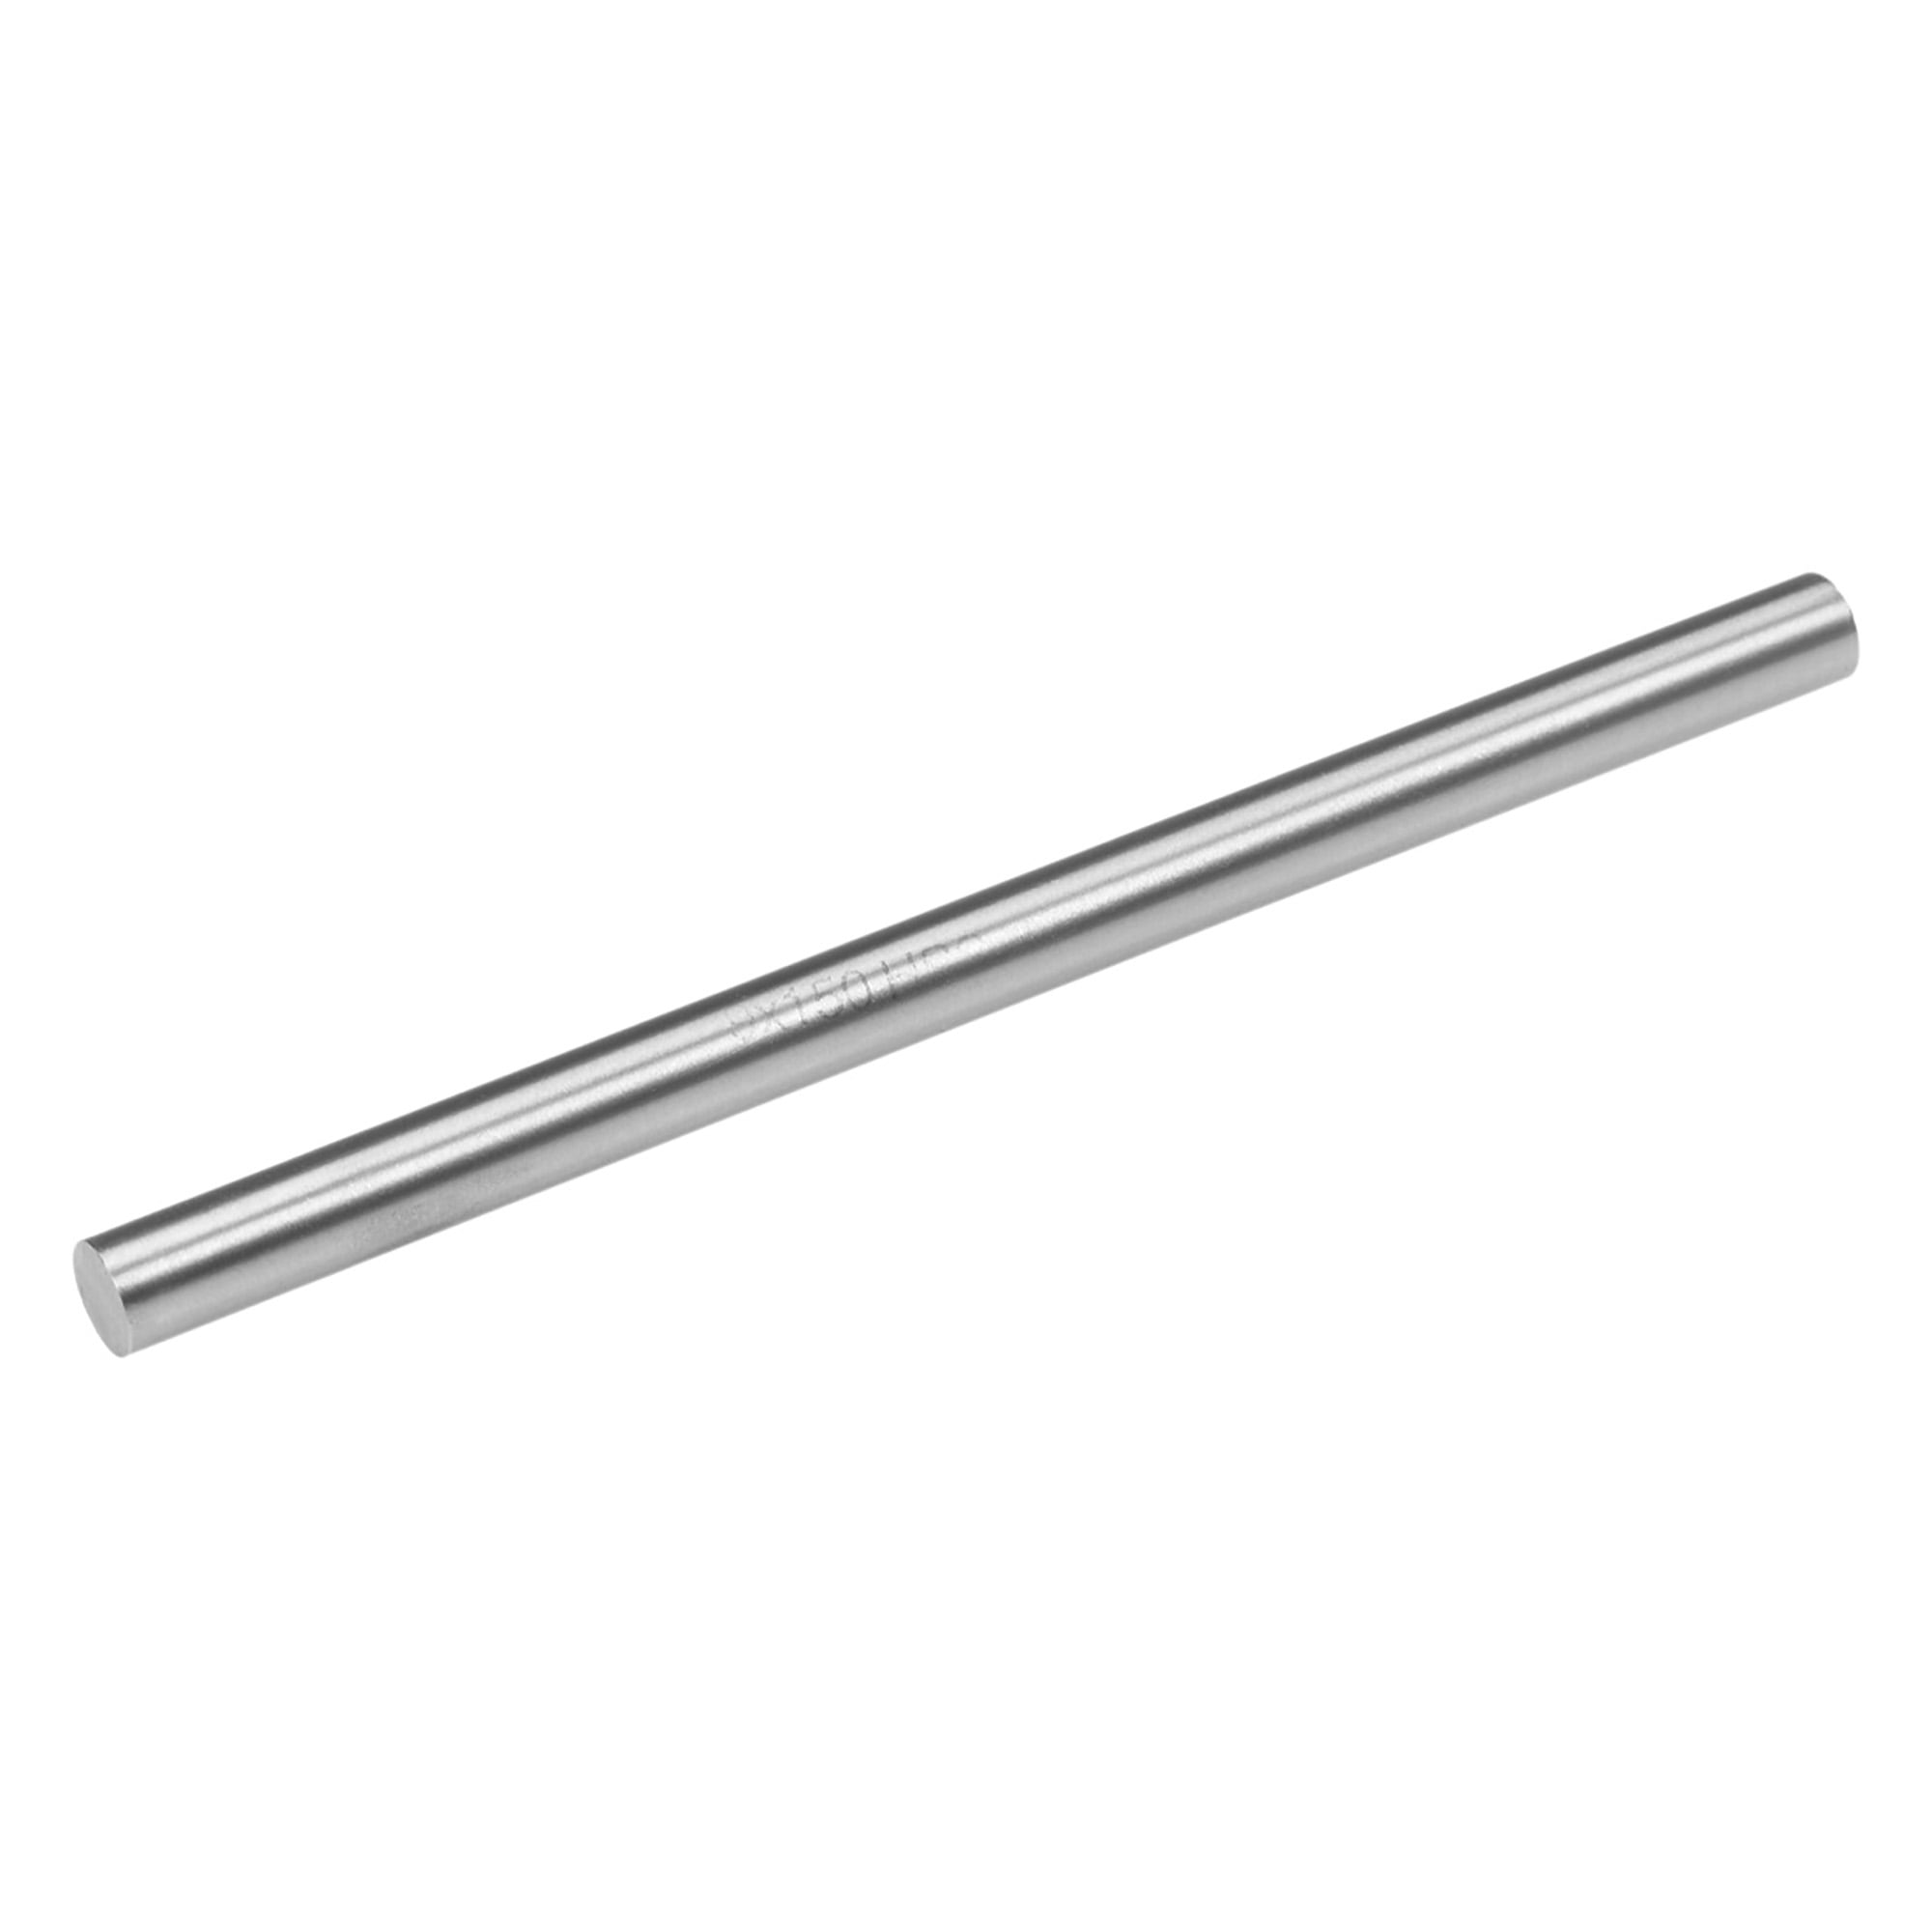 Details about   HSS Lathe Round Rod Solid Shaft Bar 8mm Dia 150mm Length 2Pcs 